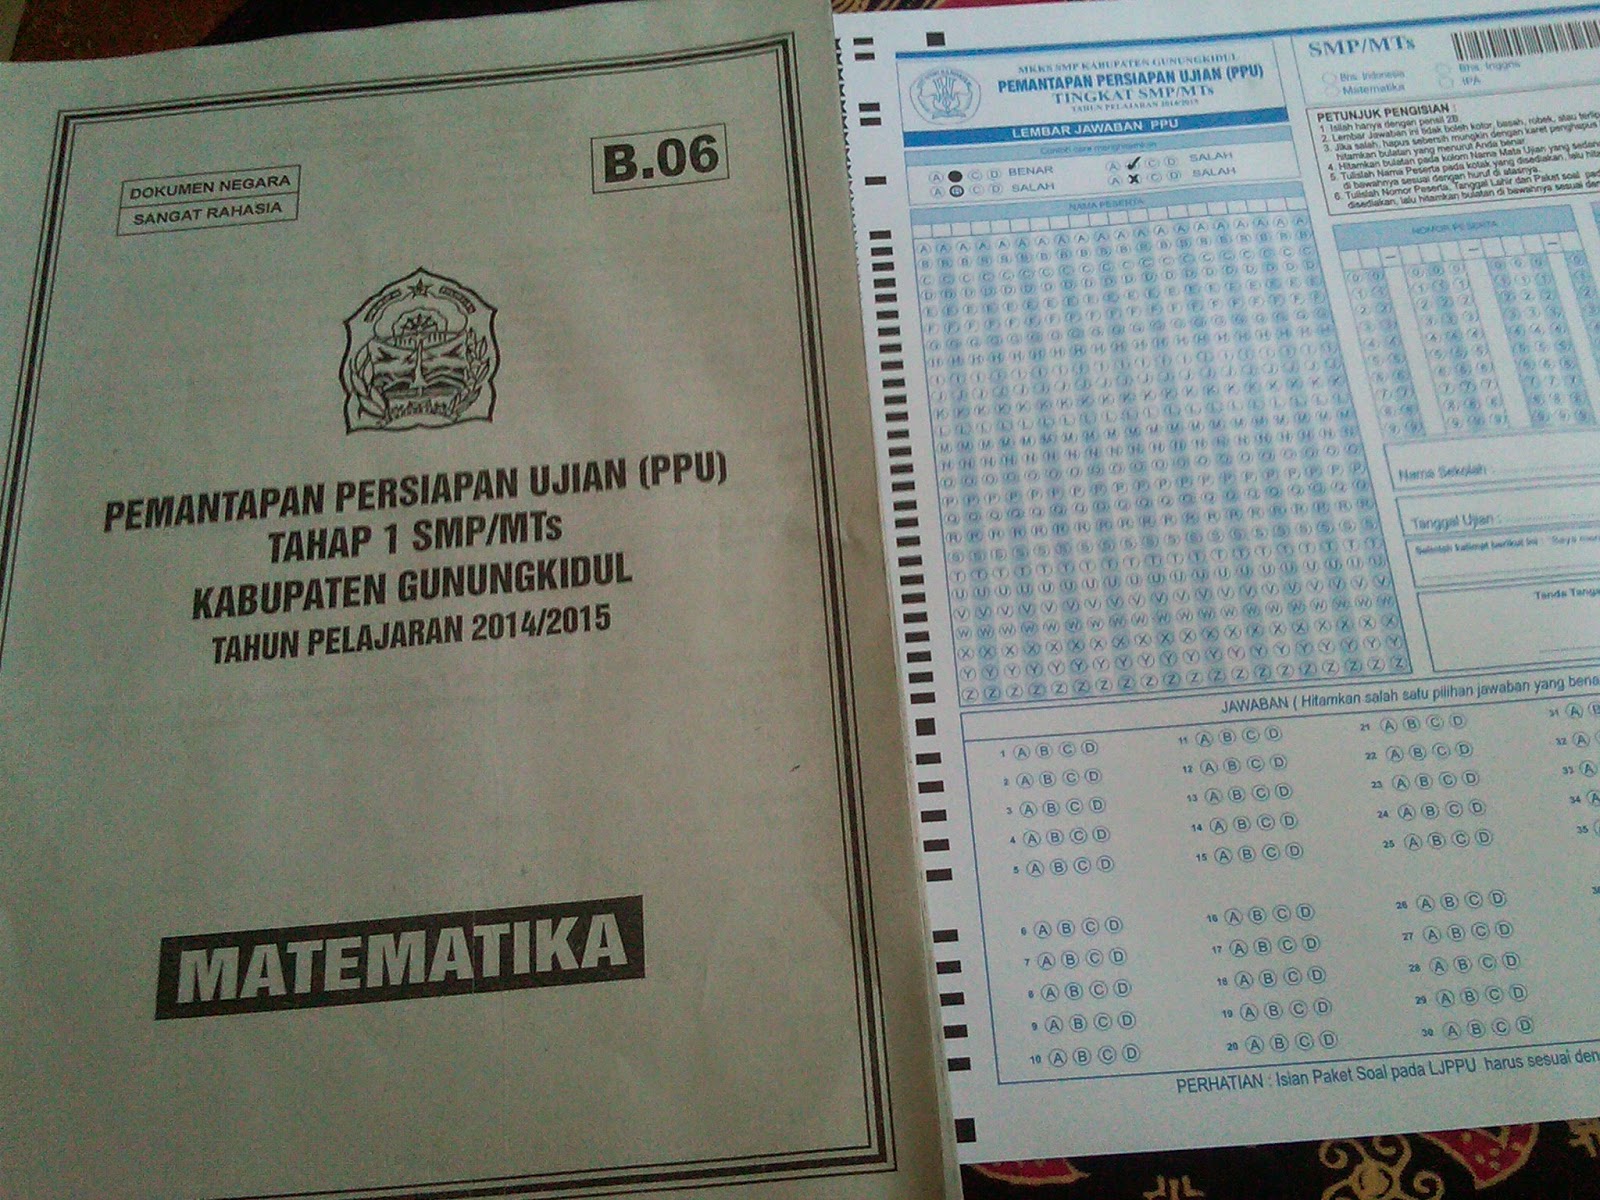 Adapun Pelaksanaan Pemantapan Persiapan Ujian PPU Tahap 1 ini pada hari pertama Mata Pelajaran Bahasa Indonesia dan Matematika dan pada hari kedua adalah